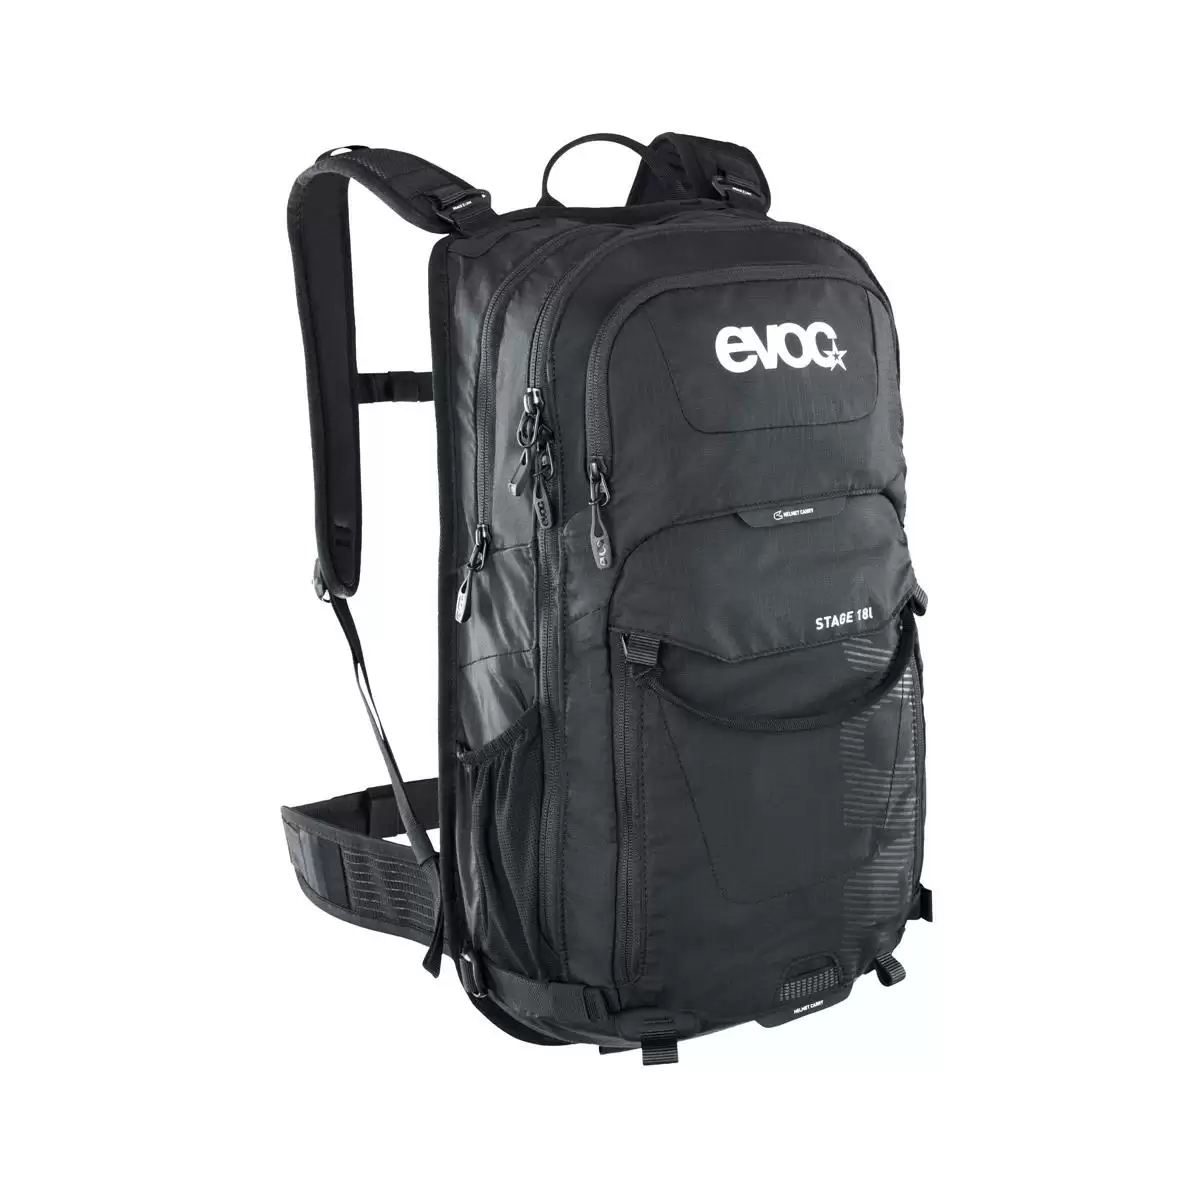 Rimpelingen Egomania Verzakking Evoc ev100203100 backpack stage 18lt black Backpack Stage 18lt black